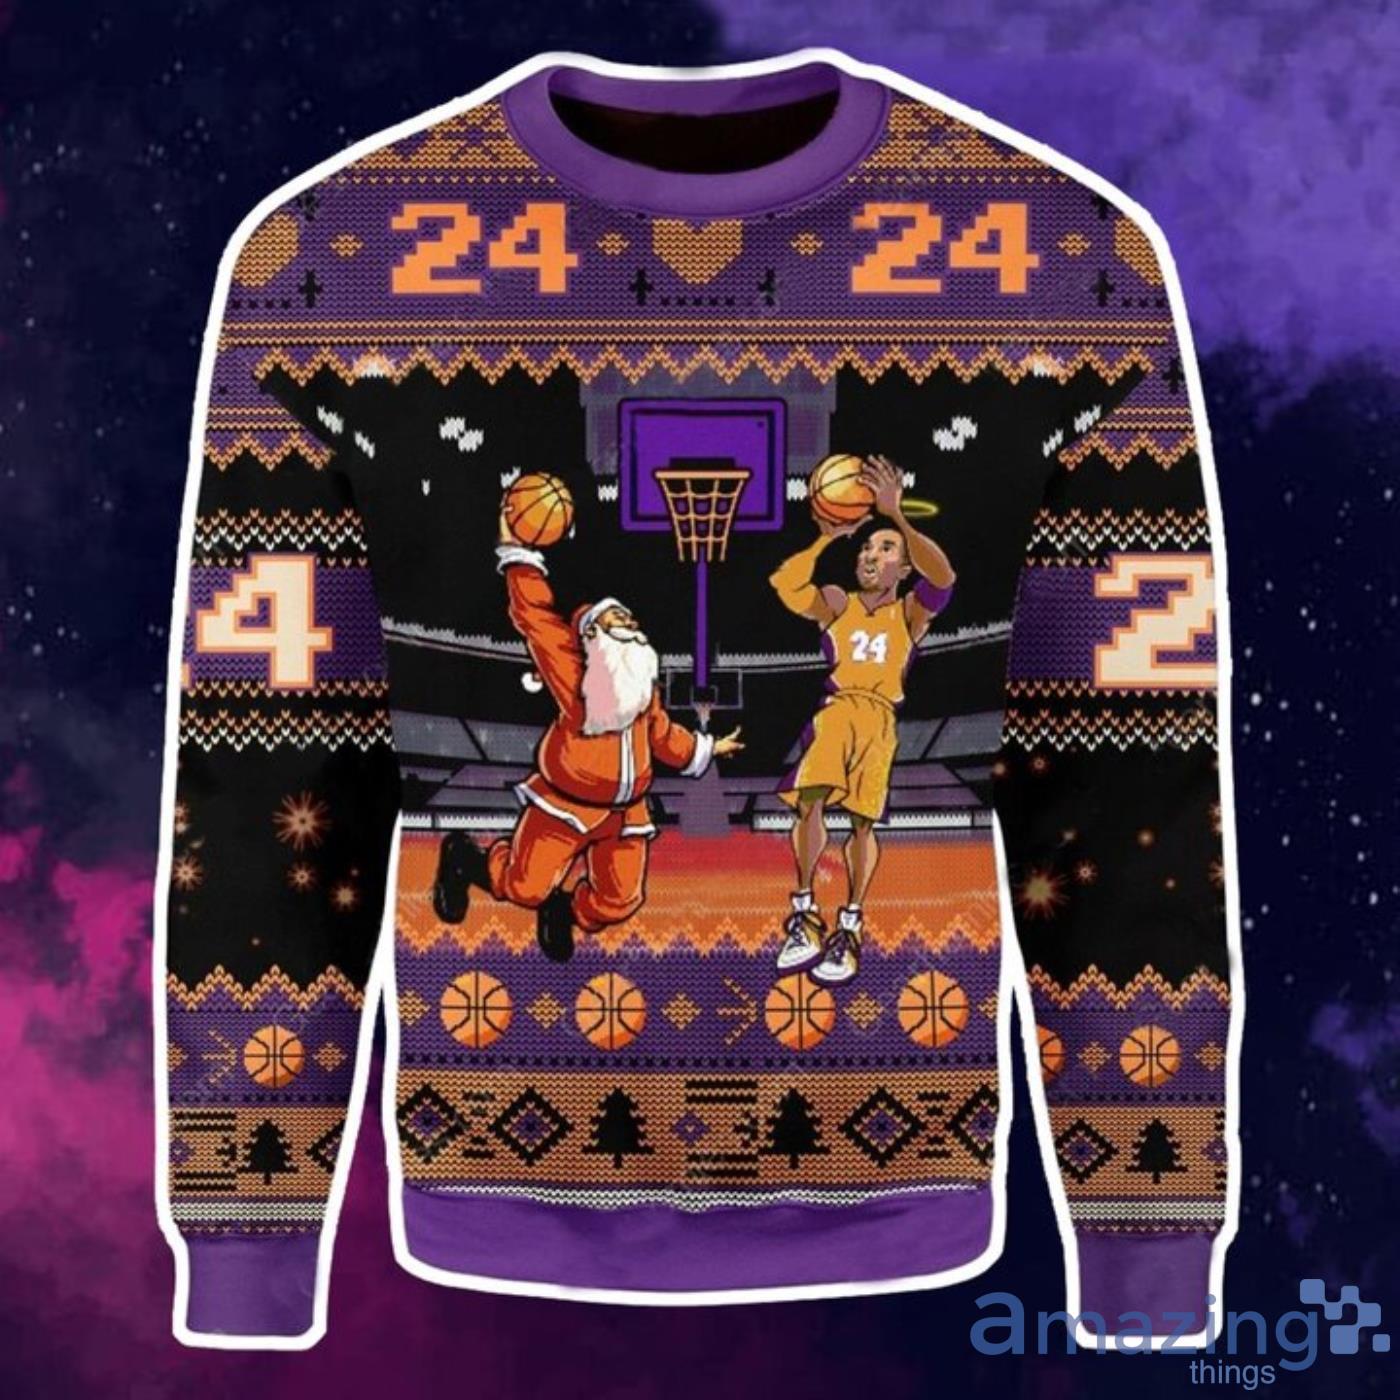 Kobe Bryant And Santa Play Basketball Christmas Ugly Sweater In Memory Kobe Bryant Product Photo 1